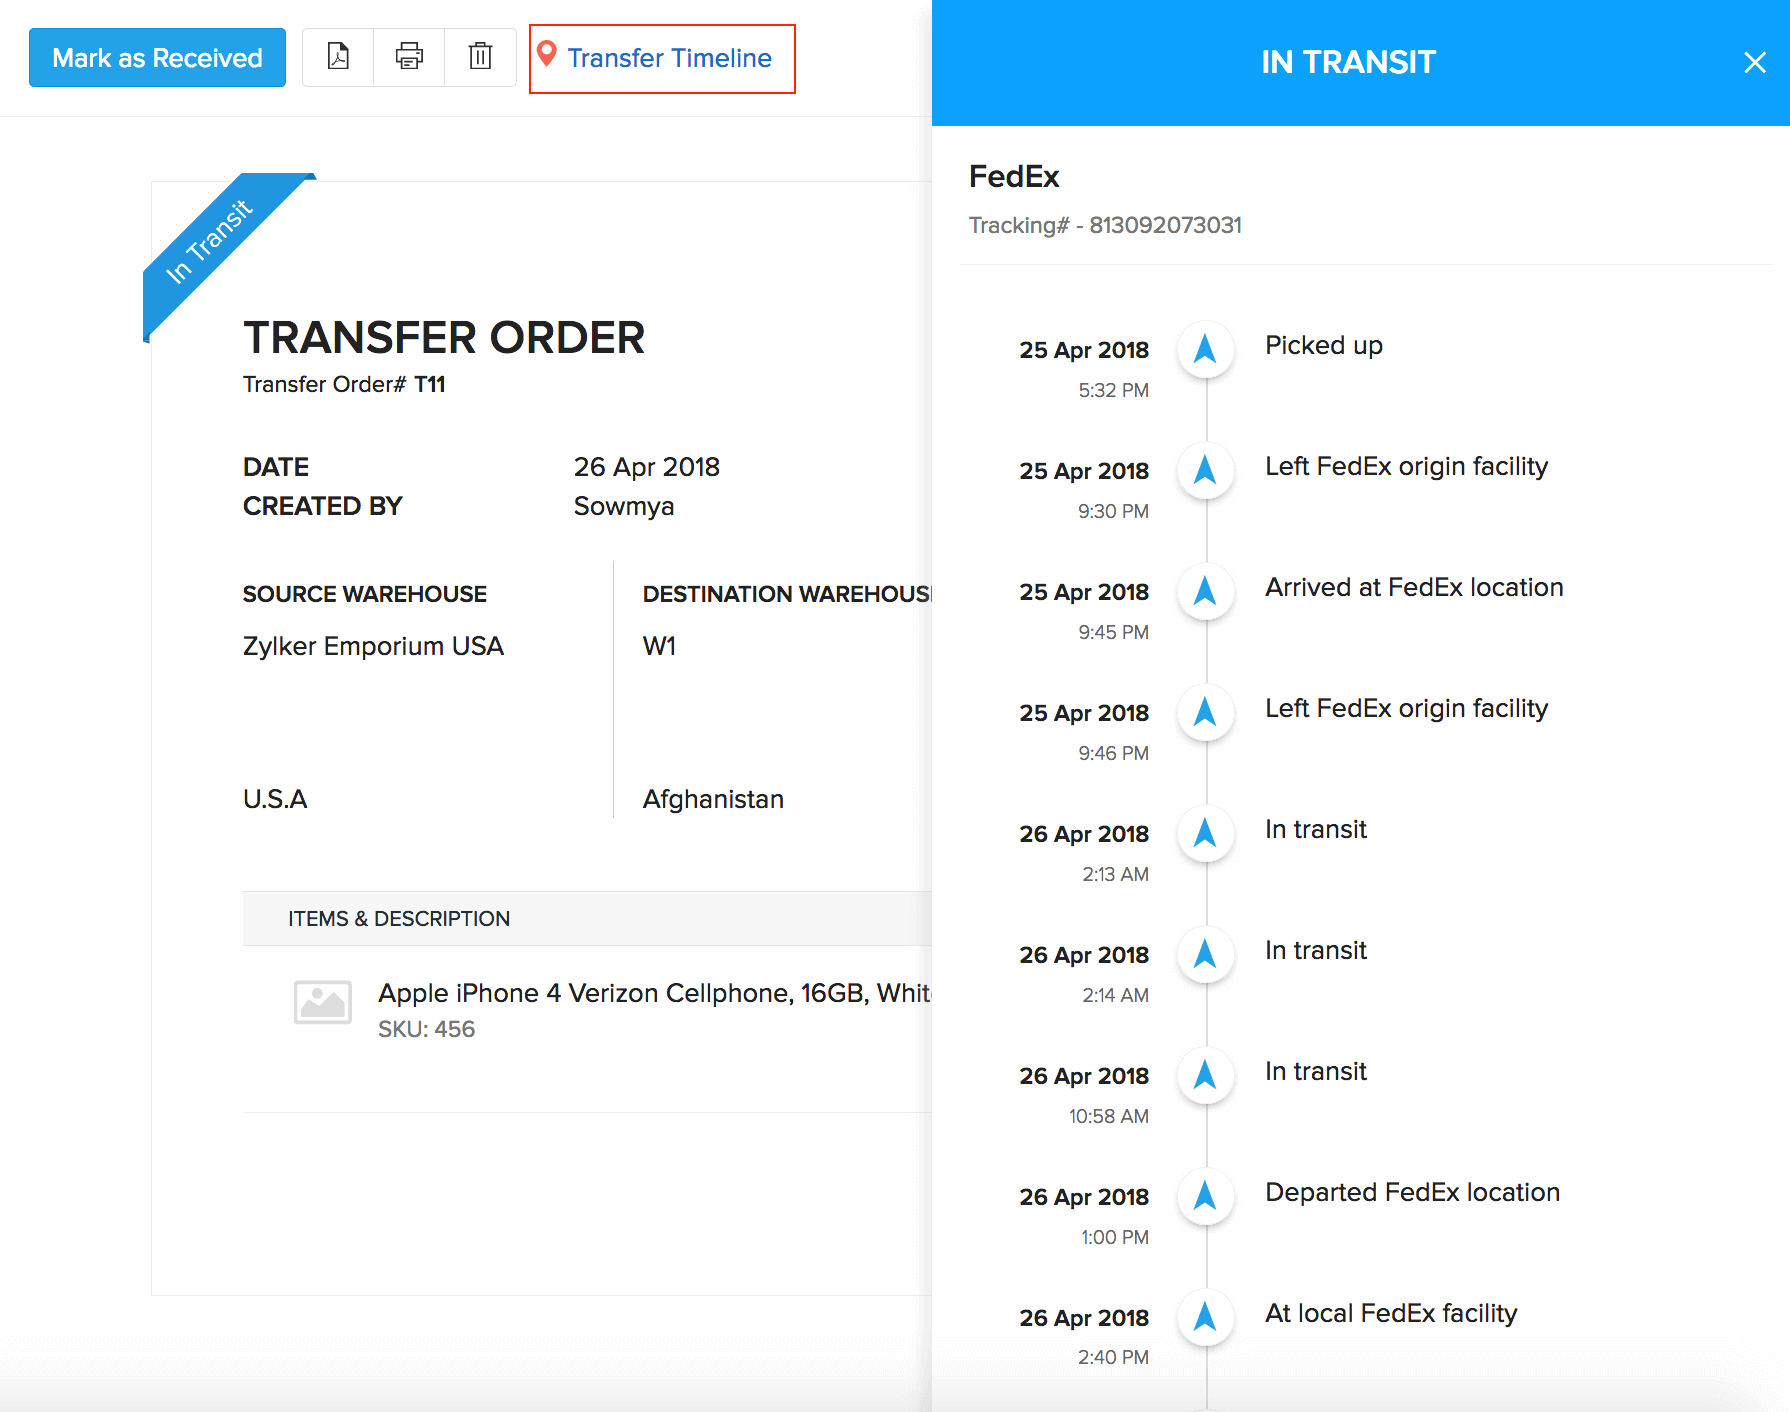 A slider tab populating real time transfer status